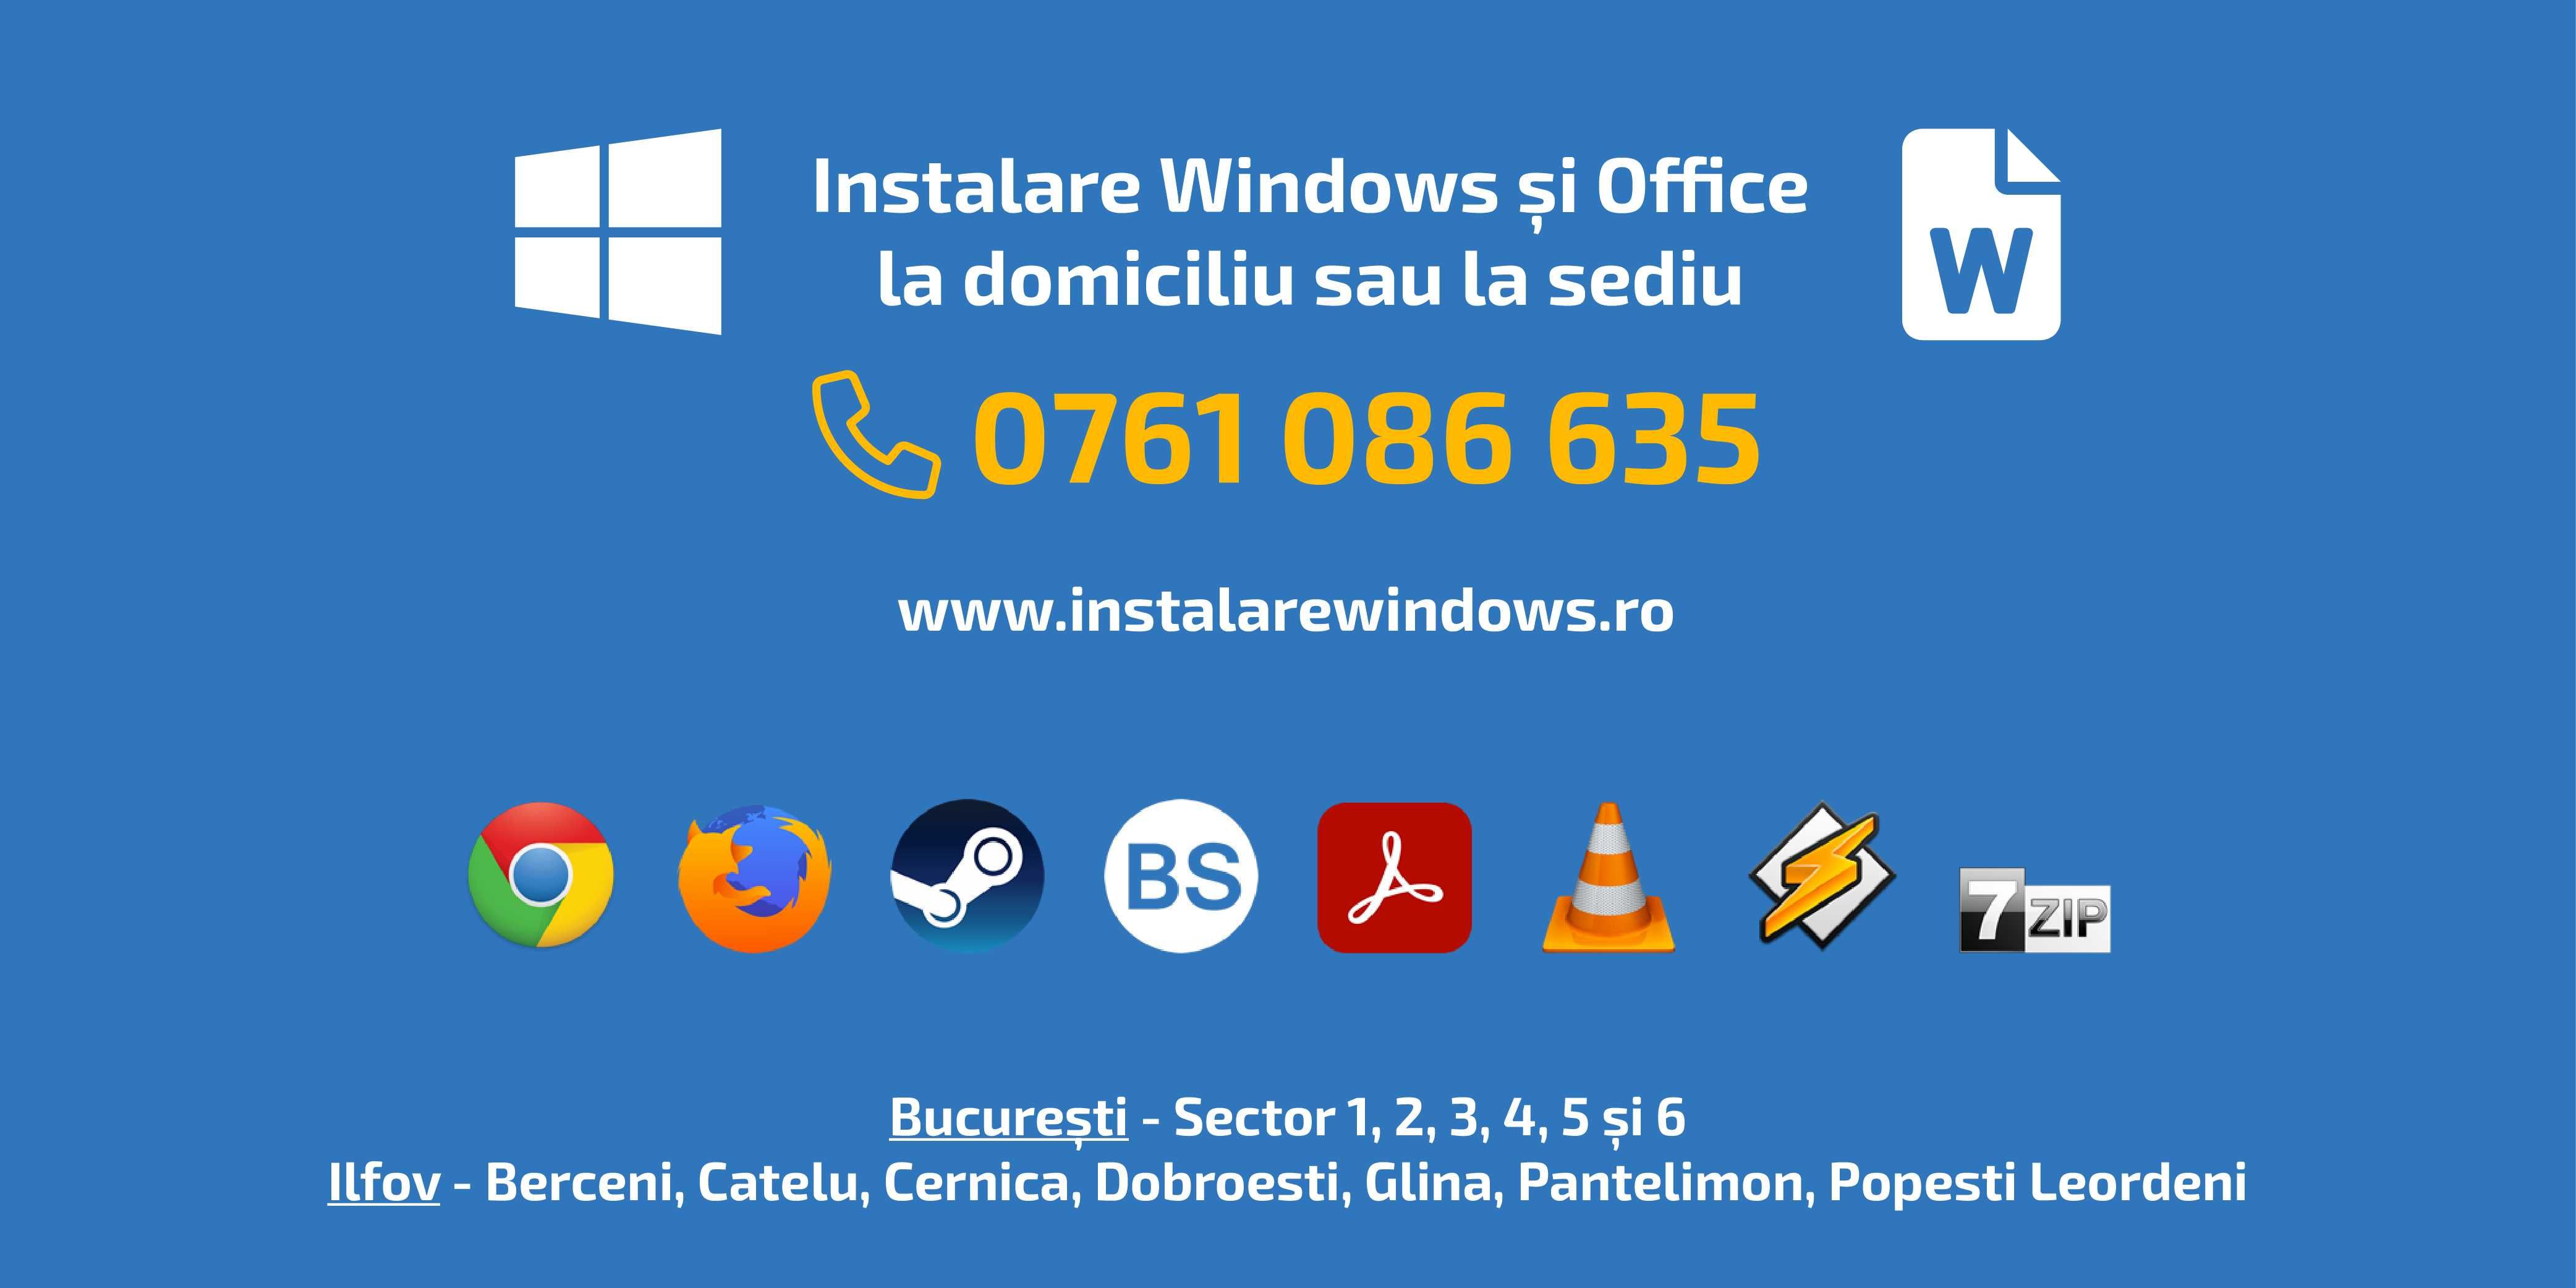 Instalare Windows la domiciliu sau la sediu, Reinstalare Windows